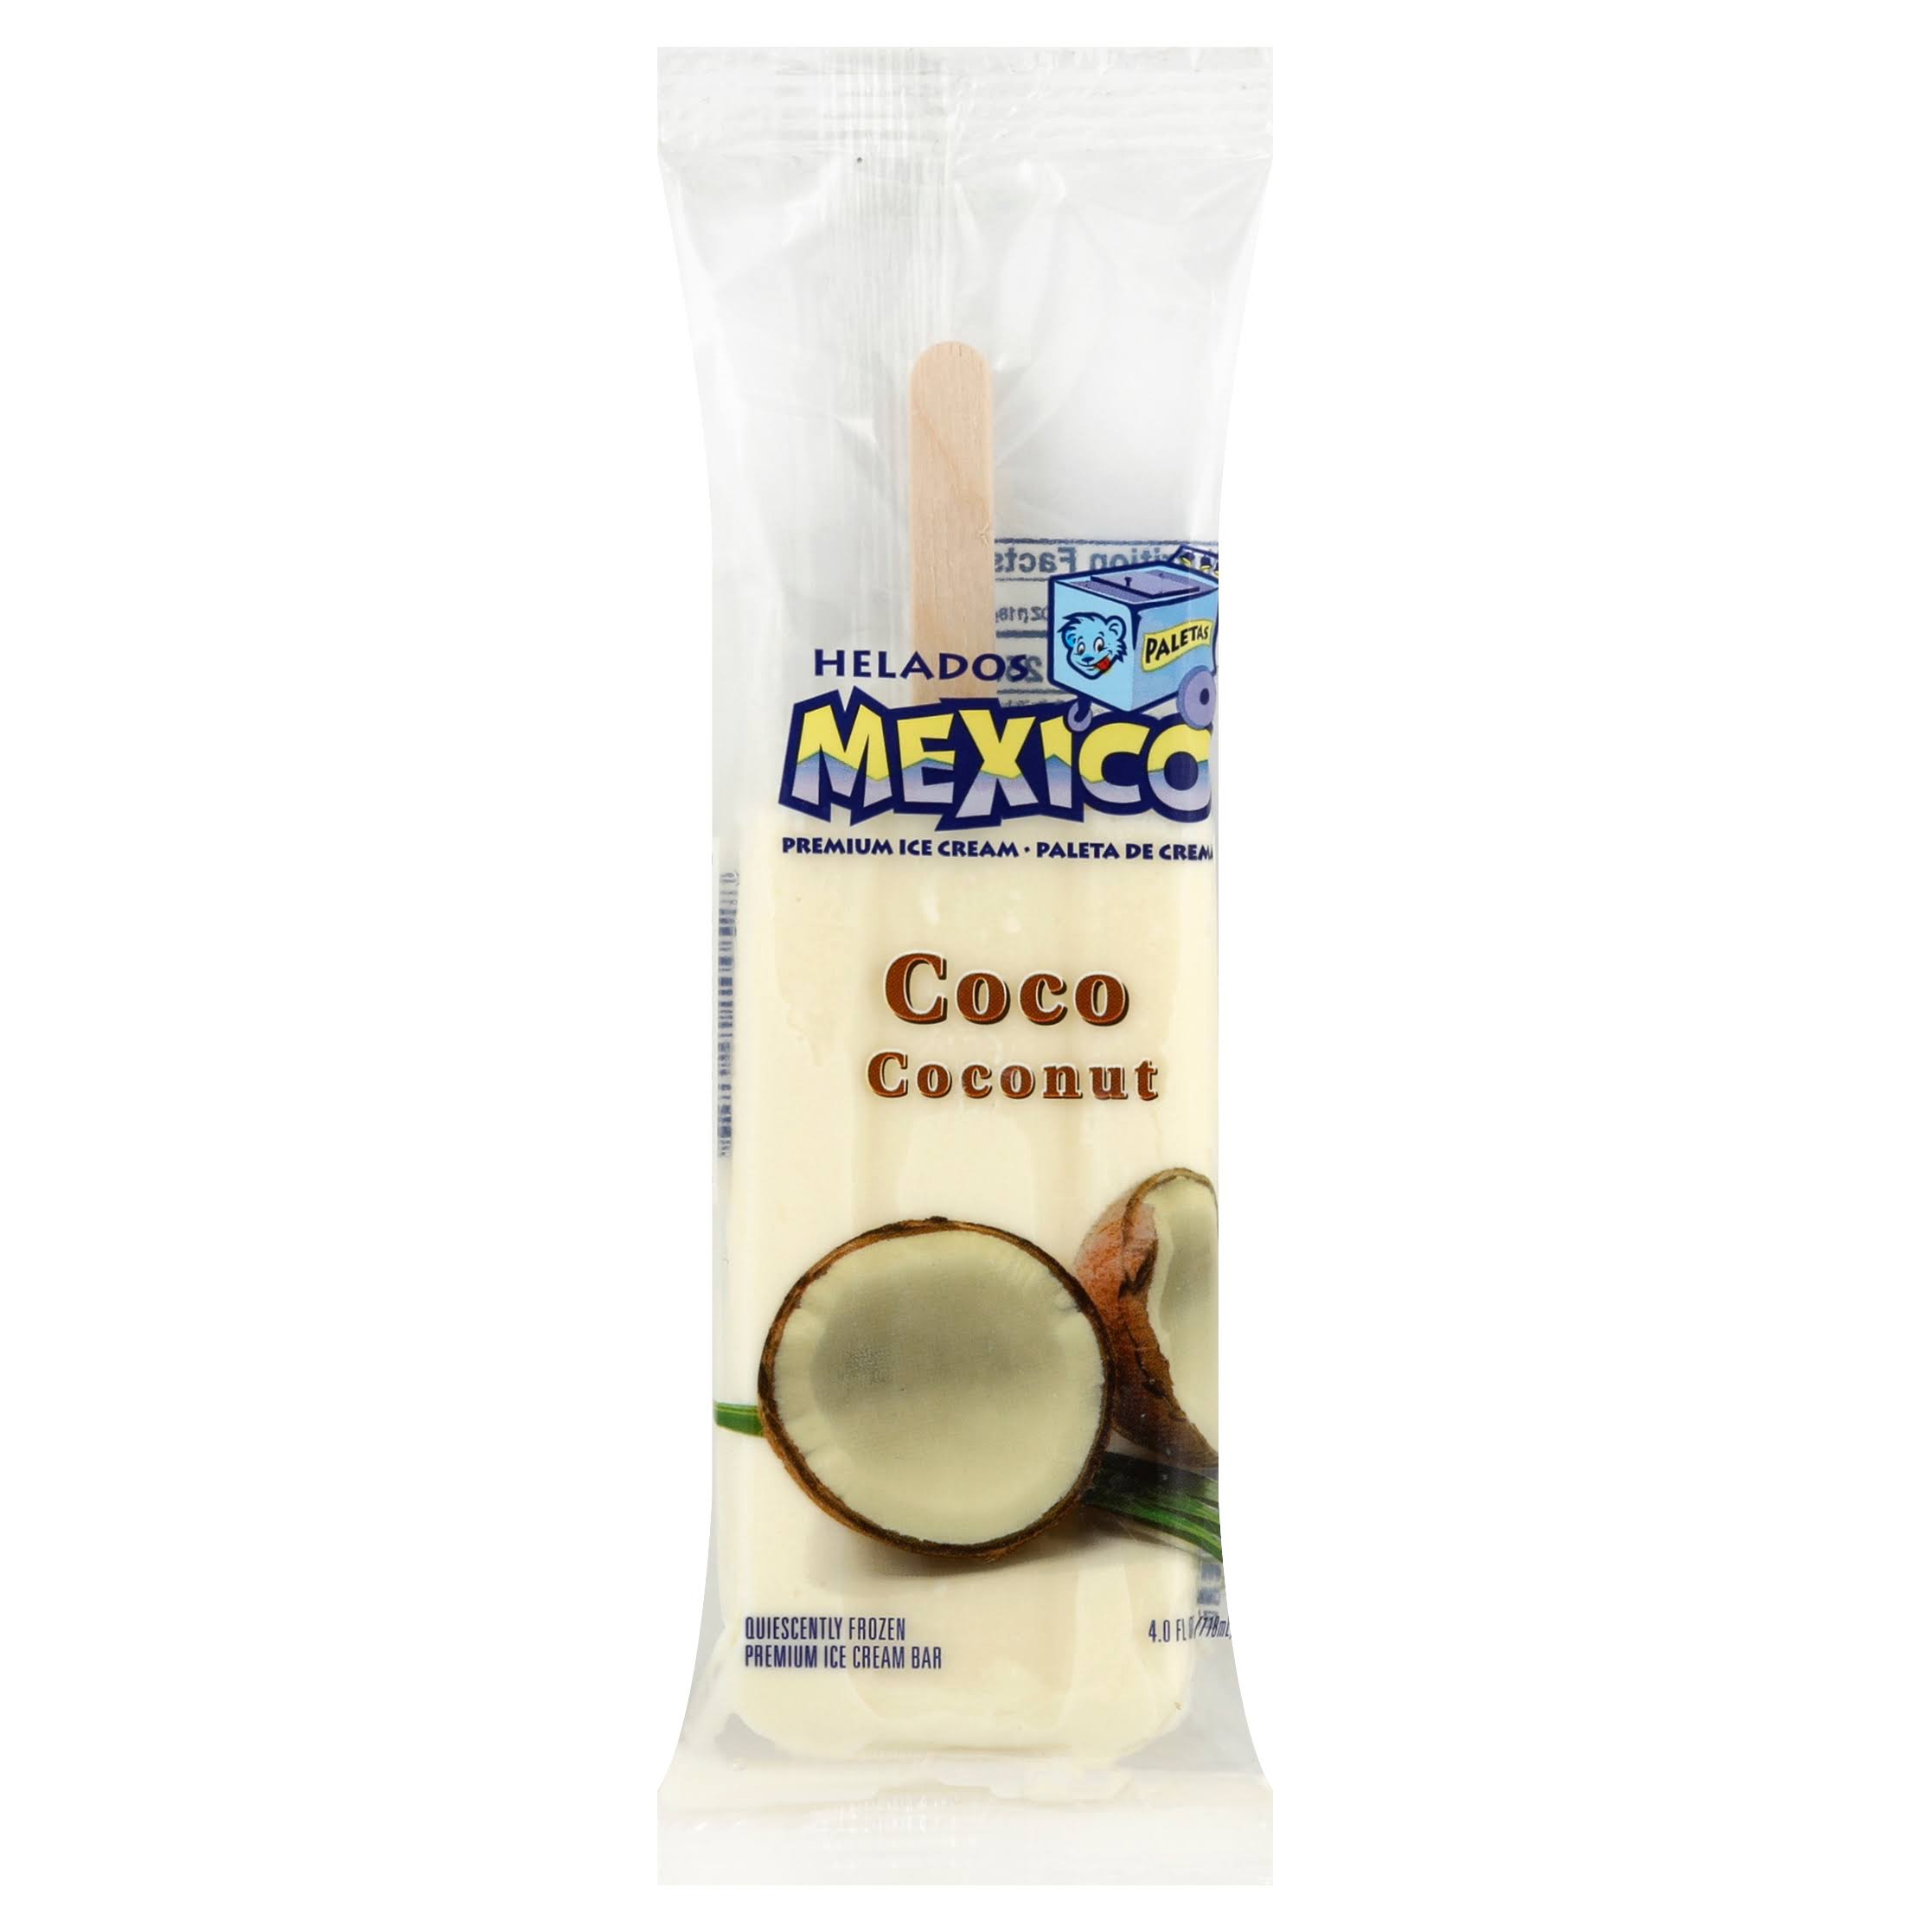 Helados Mexico Premium Ice Cream Bar - 4 oz, Coconut